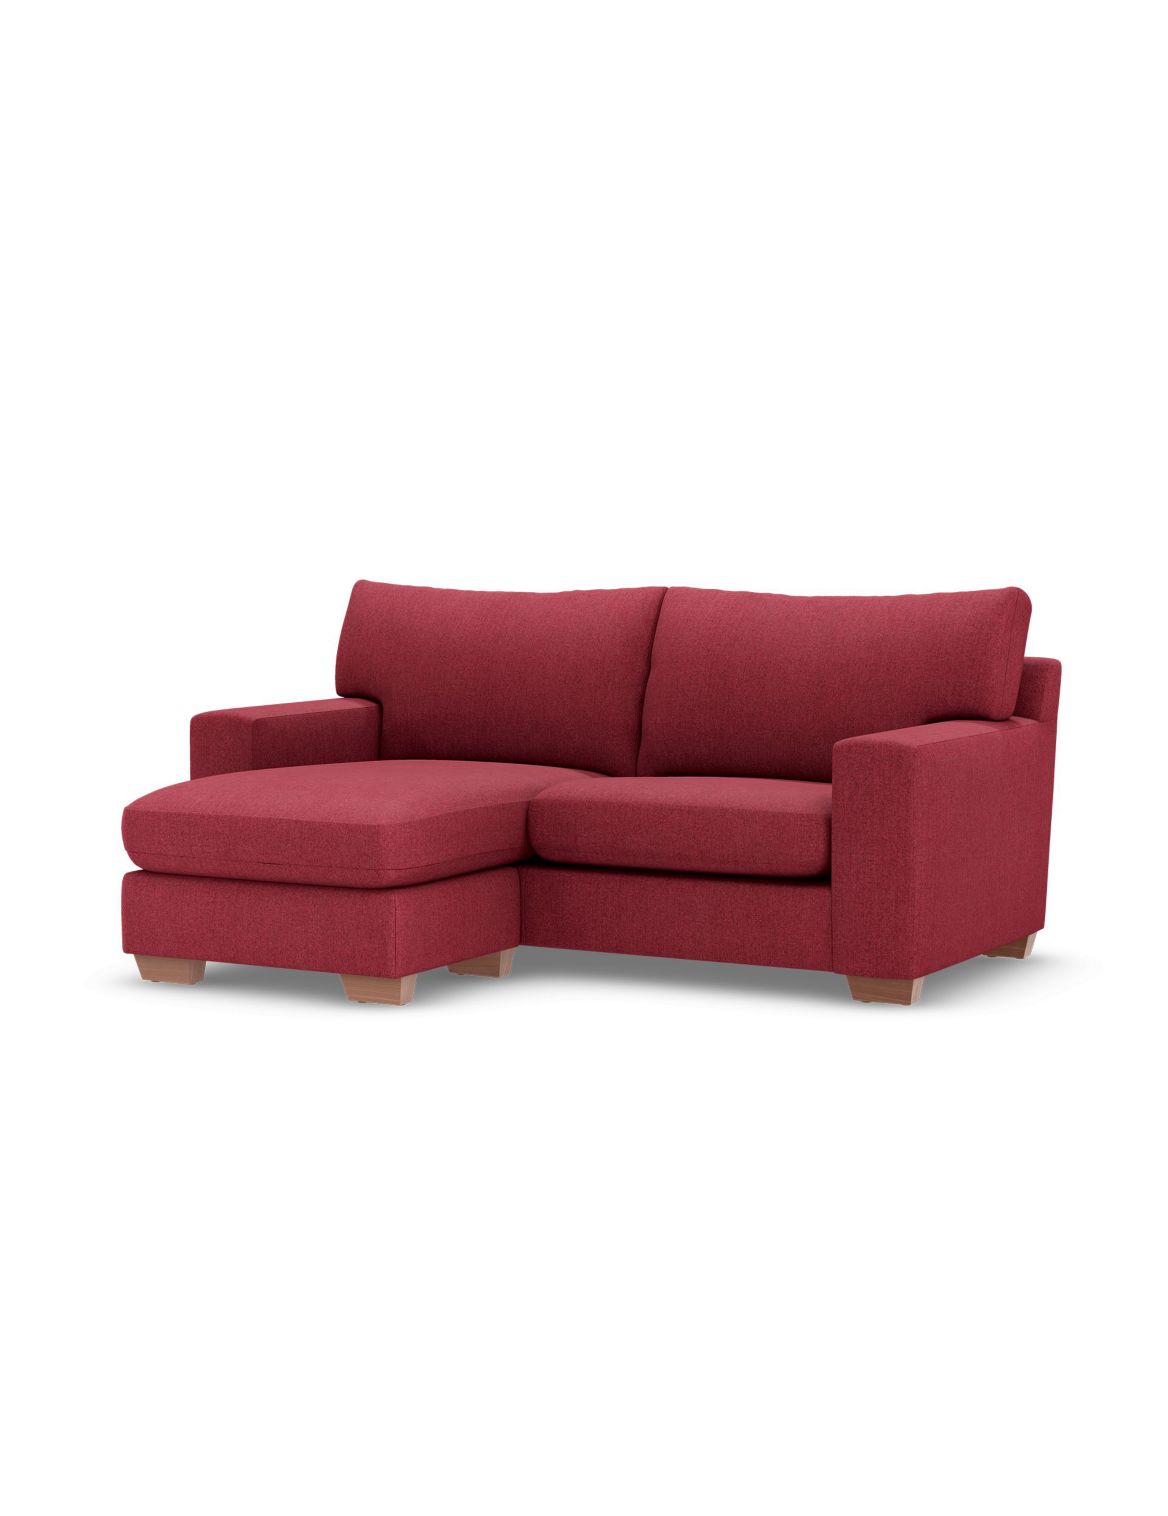 Alfie Corner Chaise Sofa red